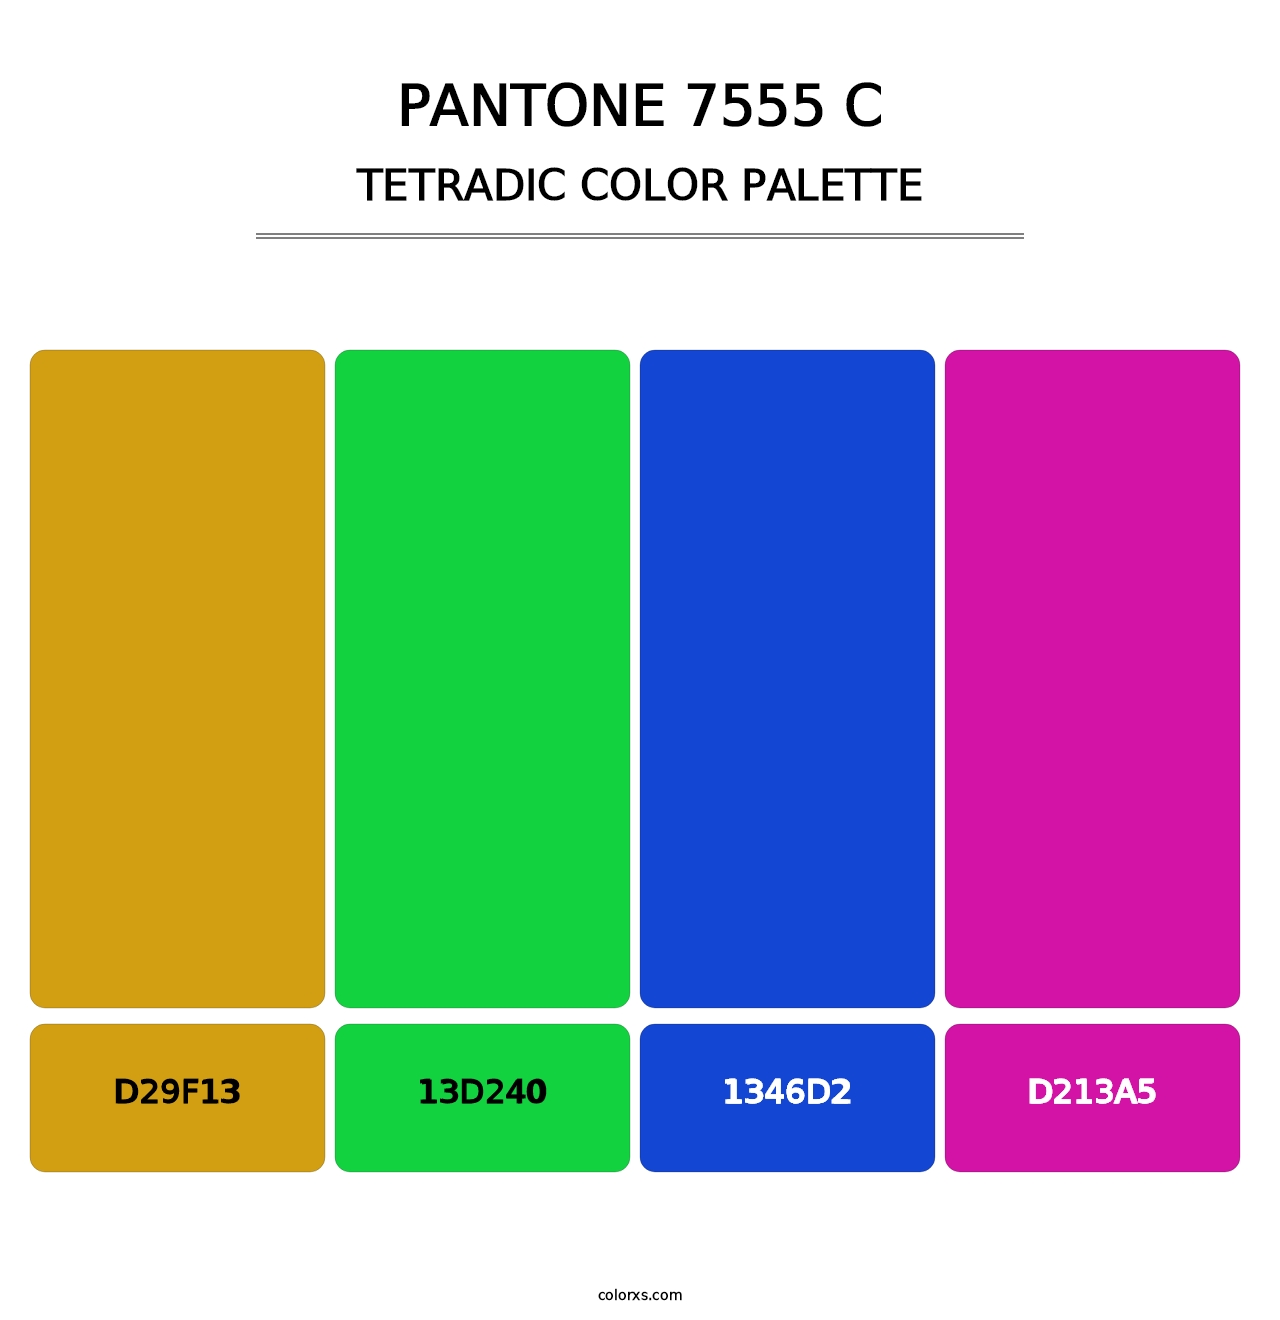 PANTONE 7555 C - Tetradic Color Palette